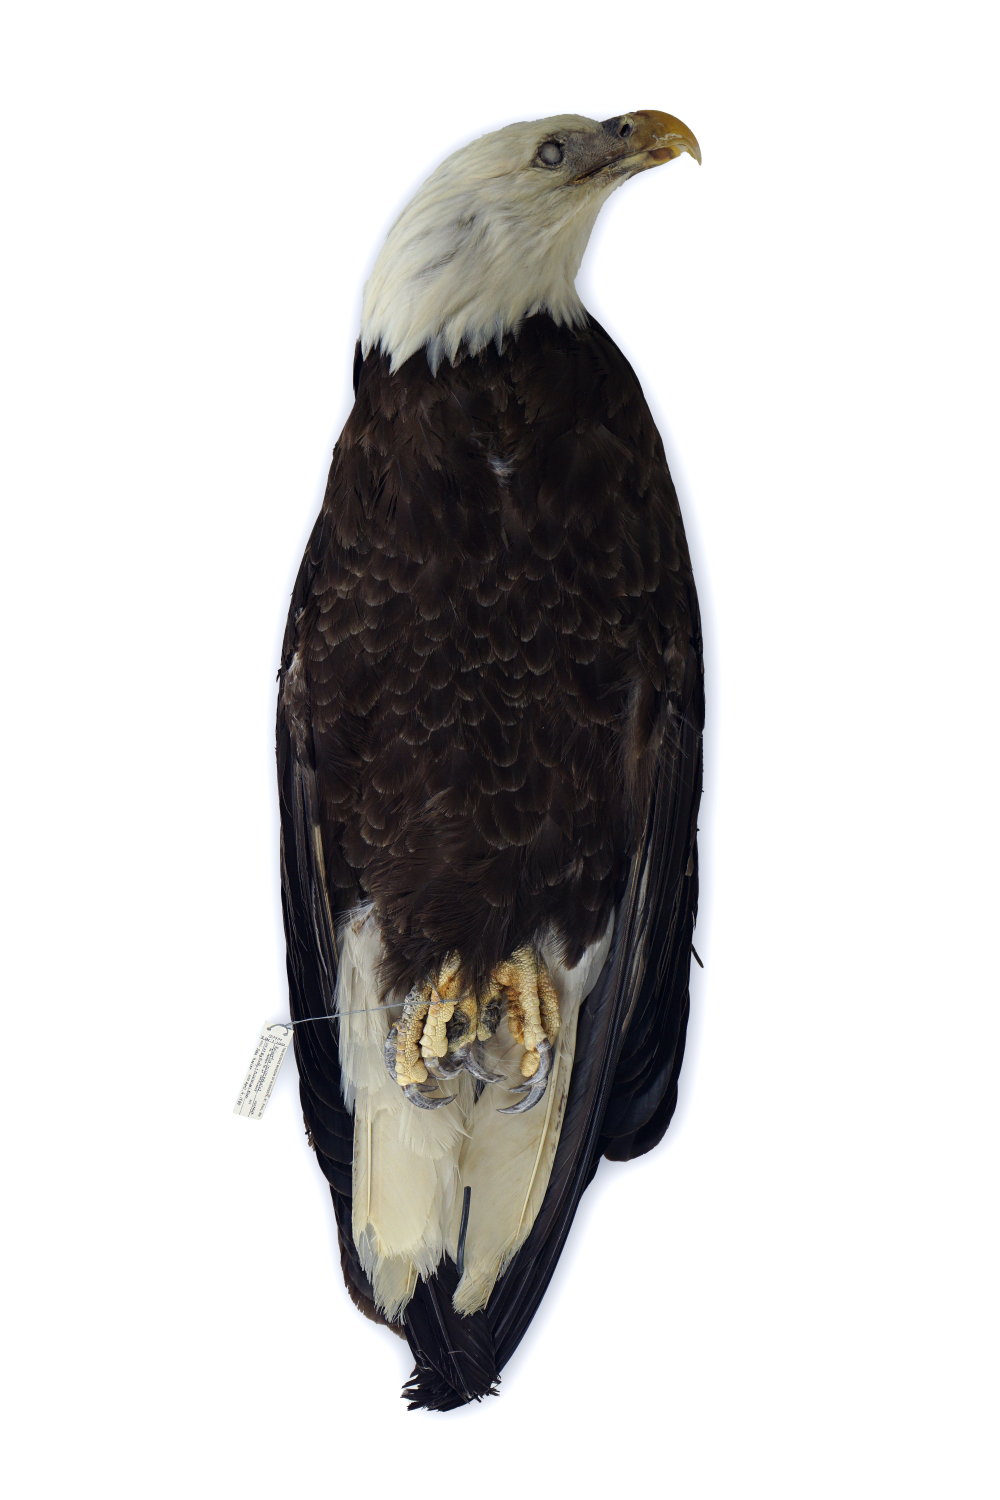 Study skin bald eagle on a white background